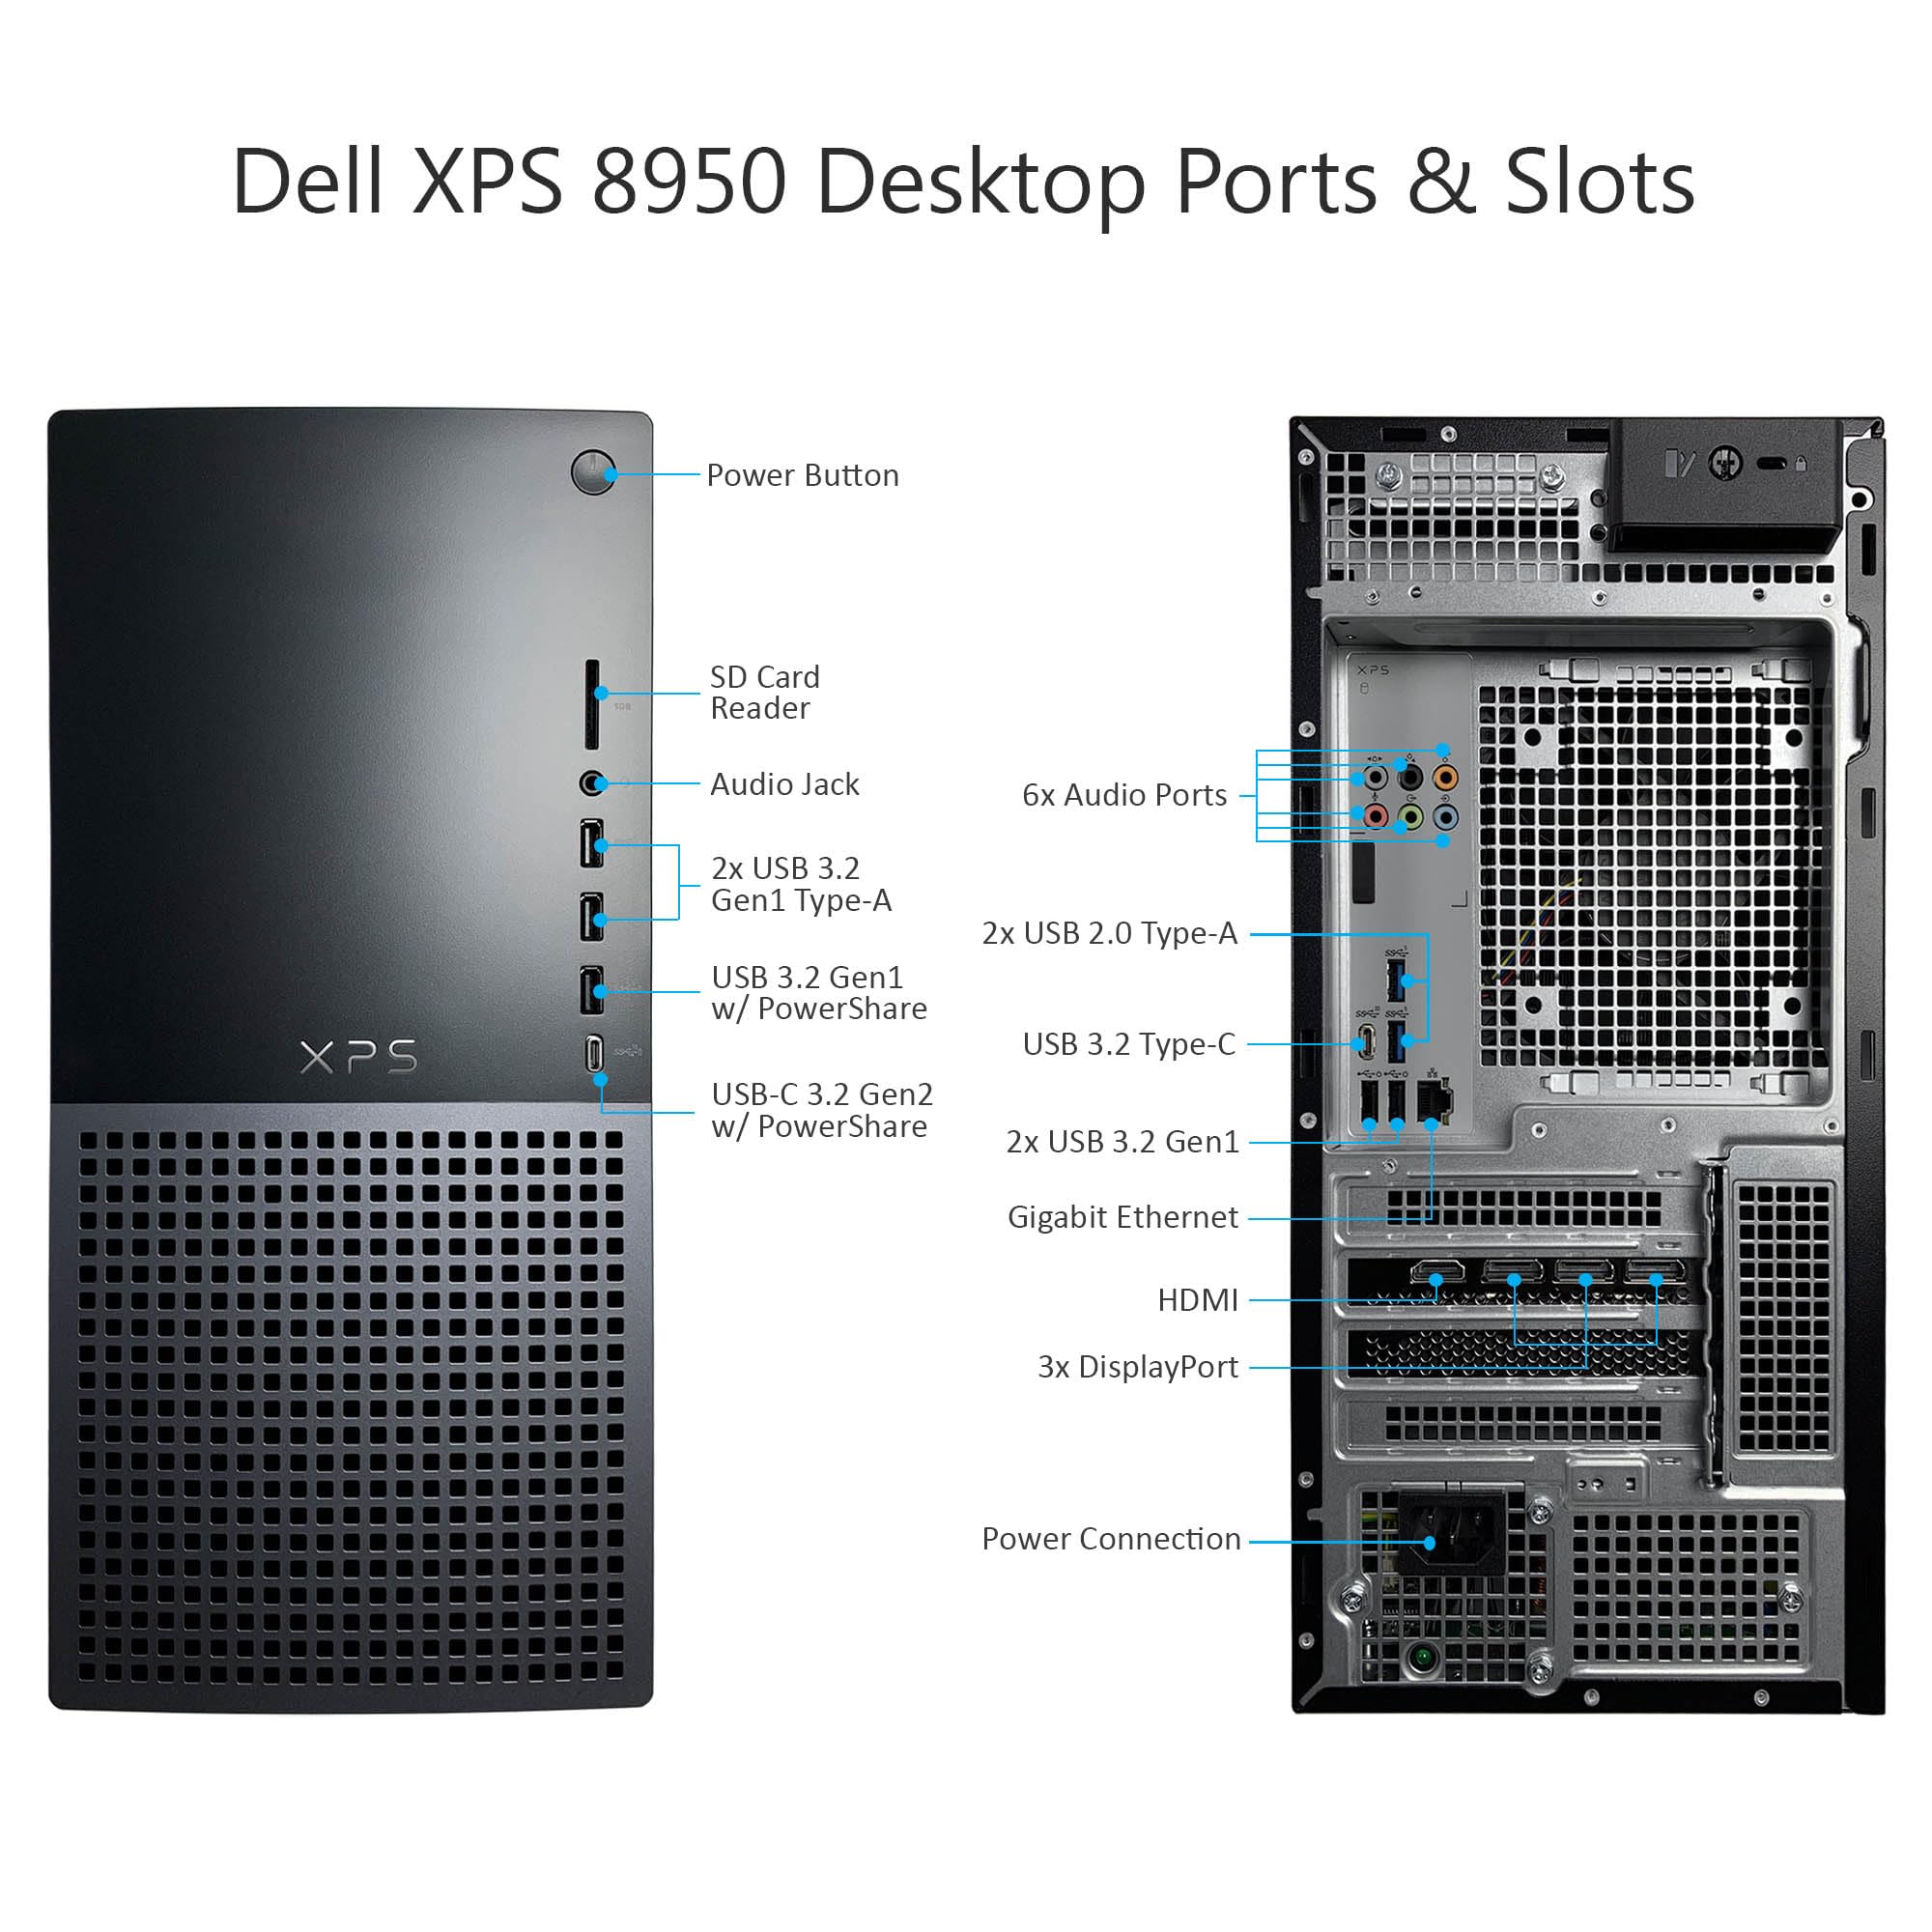 Dell XPS 8950 Gaming Desktop Computer - 12th Gen Intel Core i9-12900K up to 5.2 GHz CPU, 64GB DDR5 RAM, 1TB NVMe SSD + 1TB HDD, GeForce RTX 3090 24GB GDDR6, Killer Wi-Fi 6, Windows 11 Home